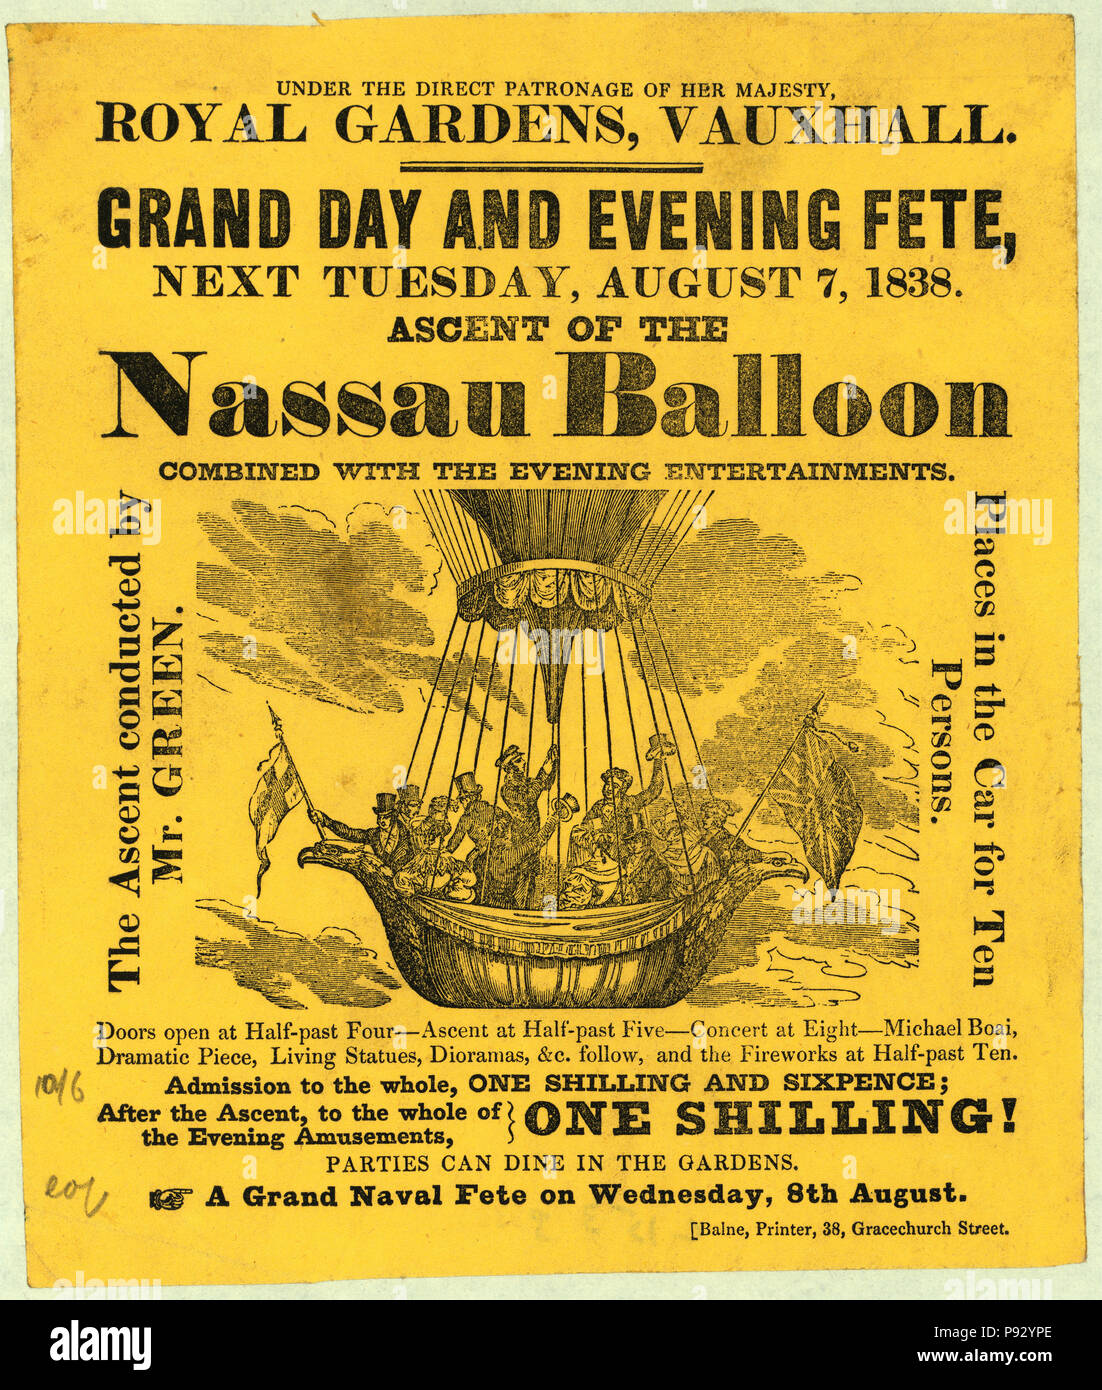 Royal Gardens,Vauxhall,Ascent of Nassau Balloon,Charles Green,London,England